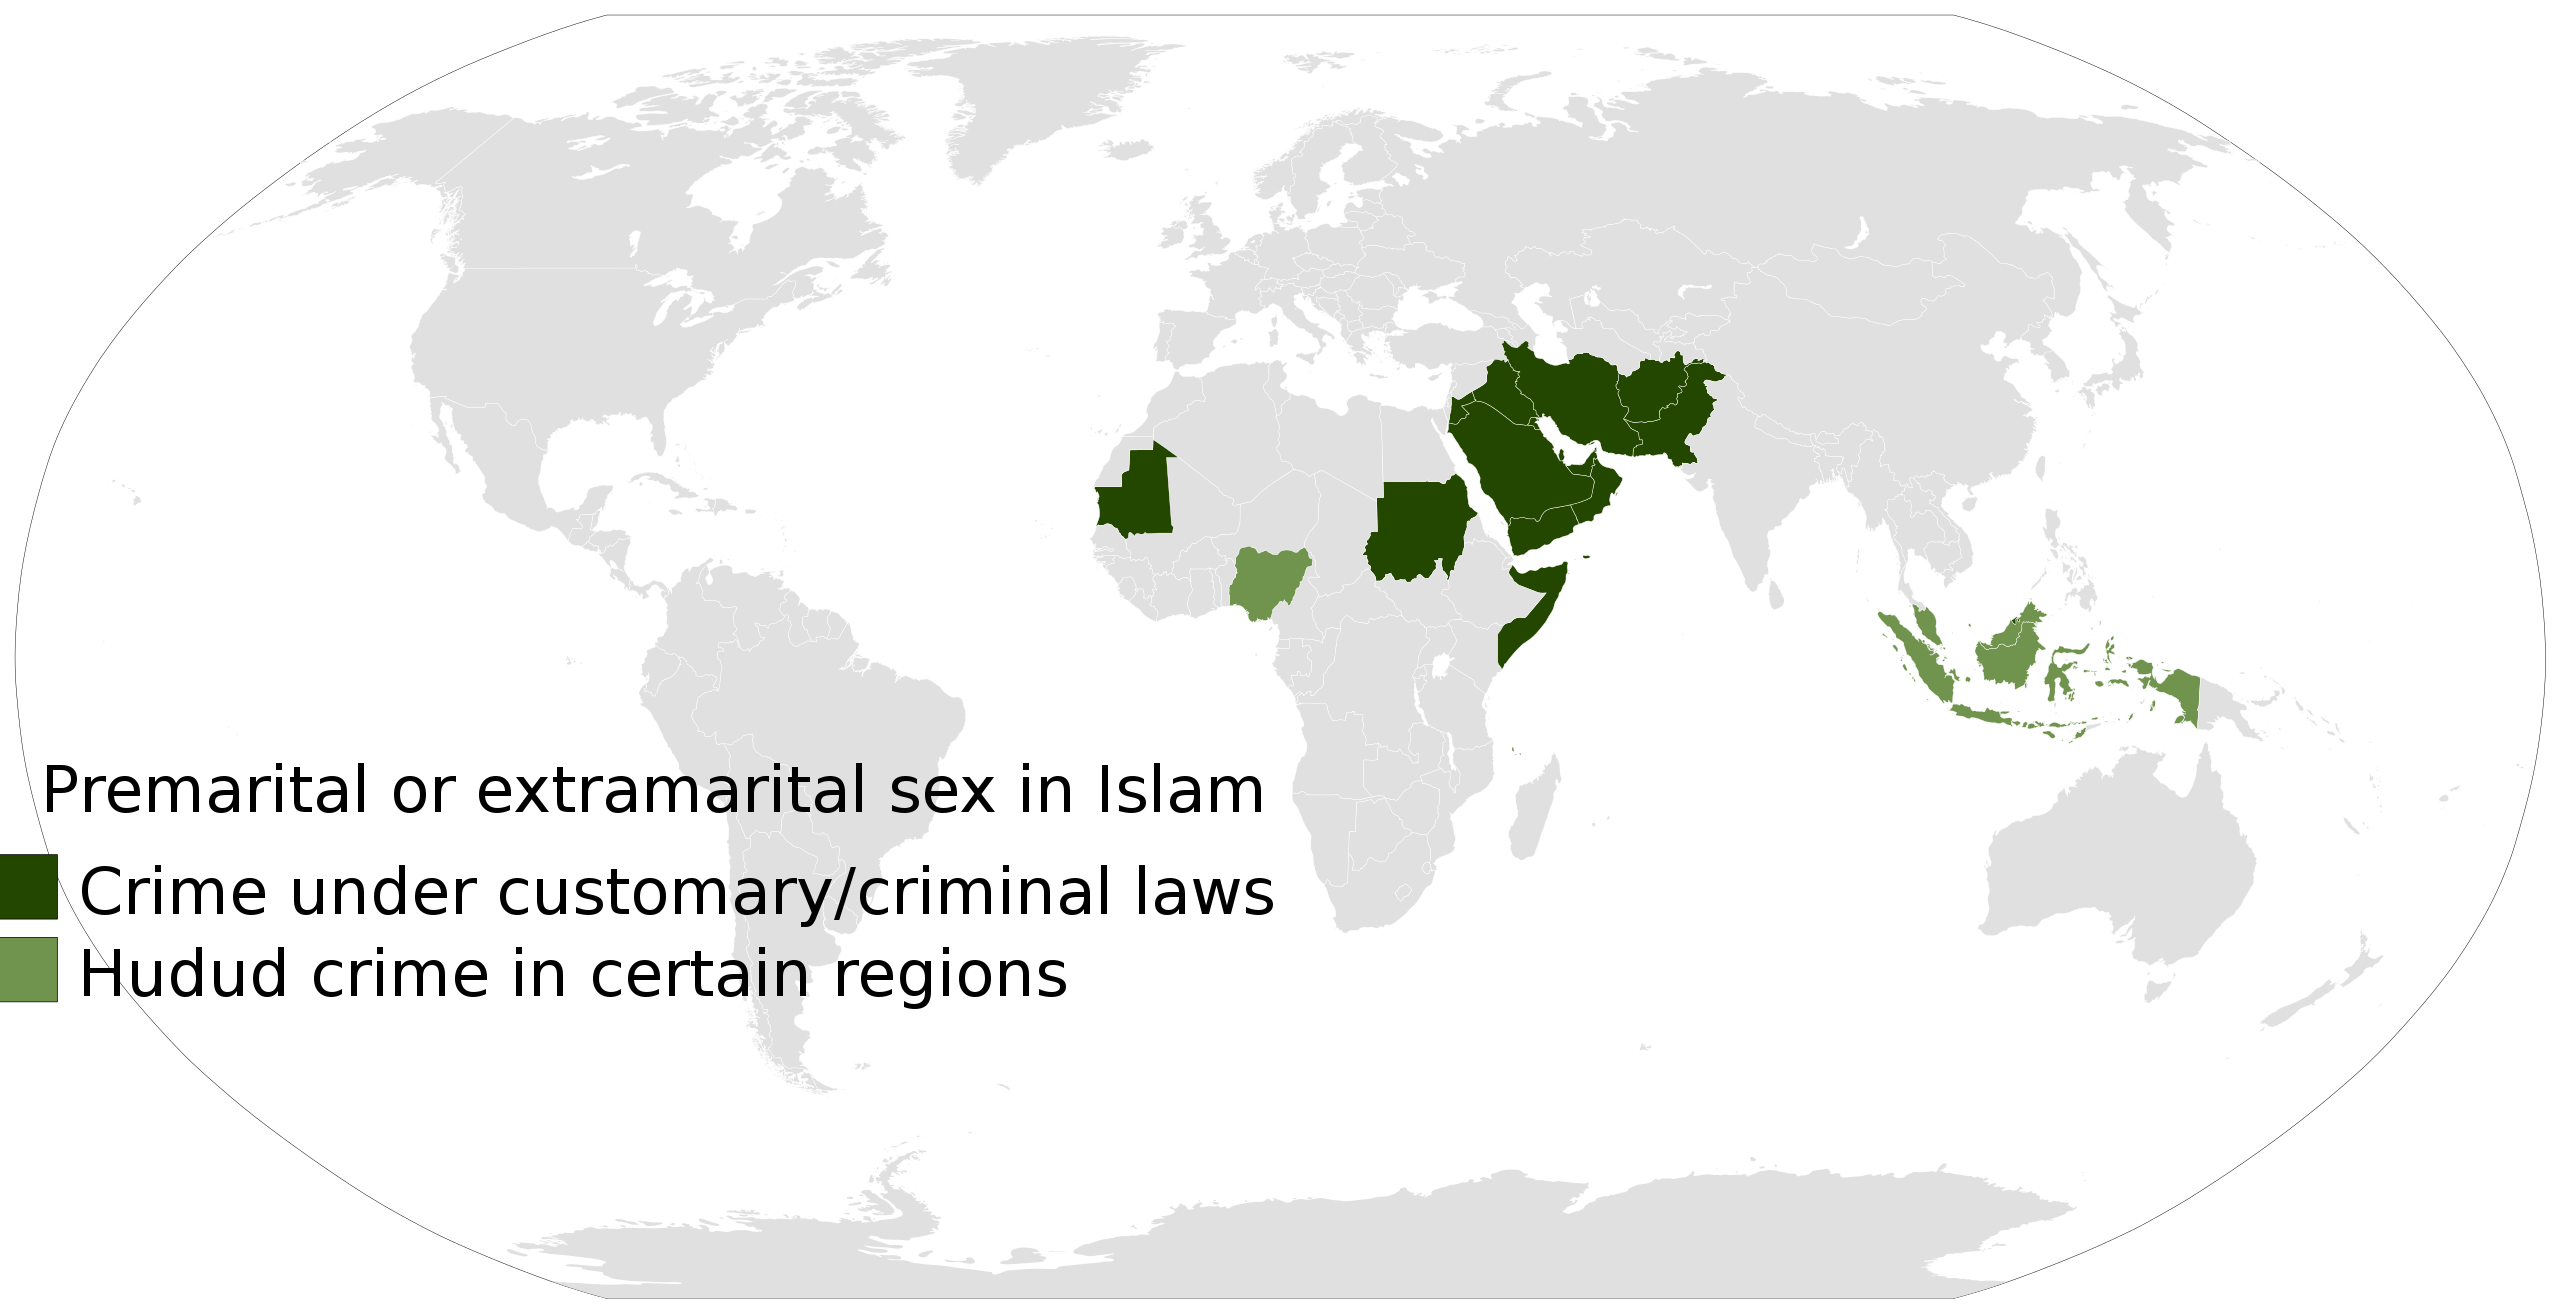 FileCriminalization of premarital and extramarital sex as zina under sharia in Islam.SVG picture